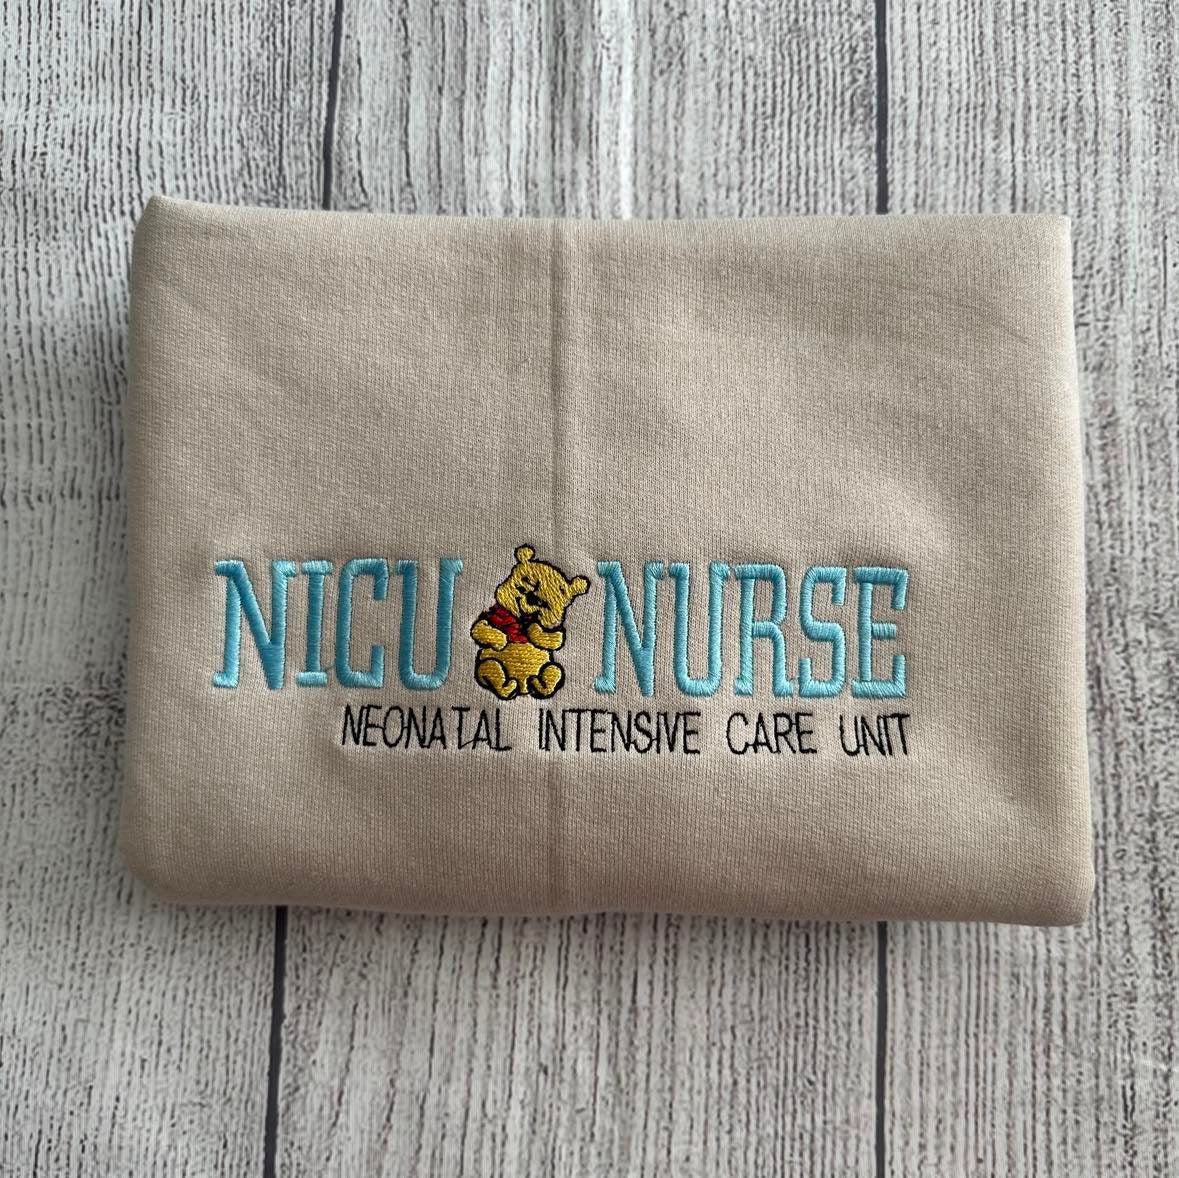 NICU Nurse Embroidered sweatshirt; Baby Winnie the Pooh crewneck; health care gifts